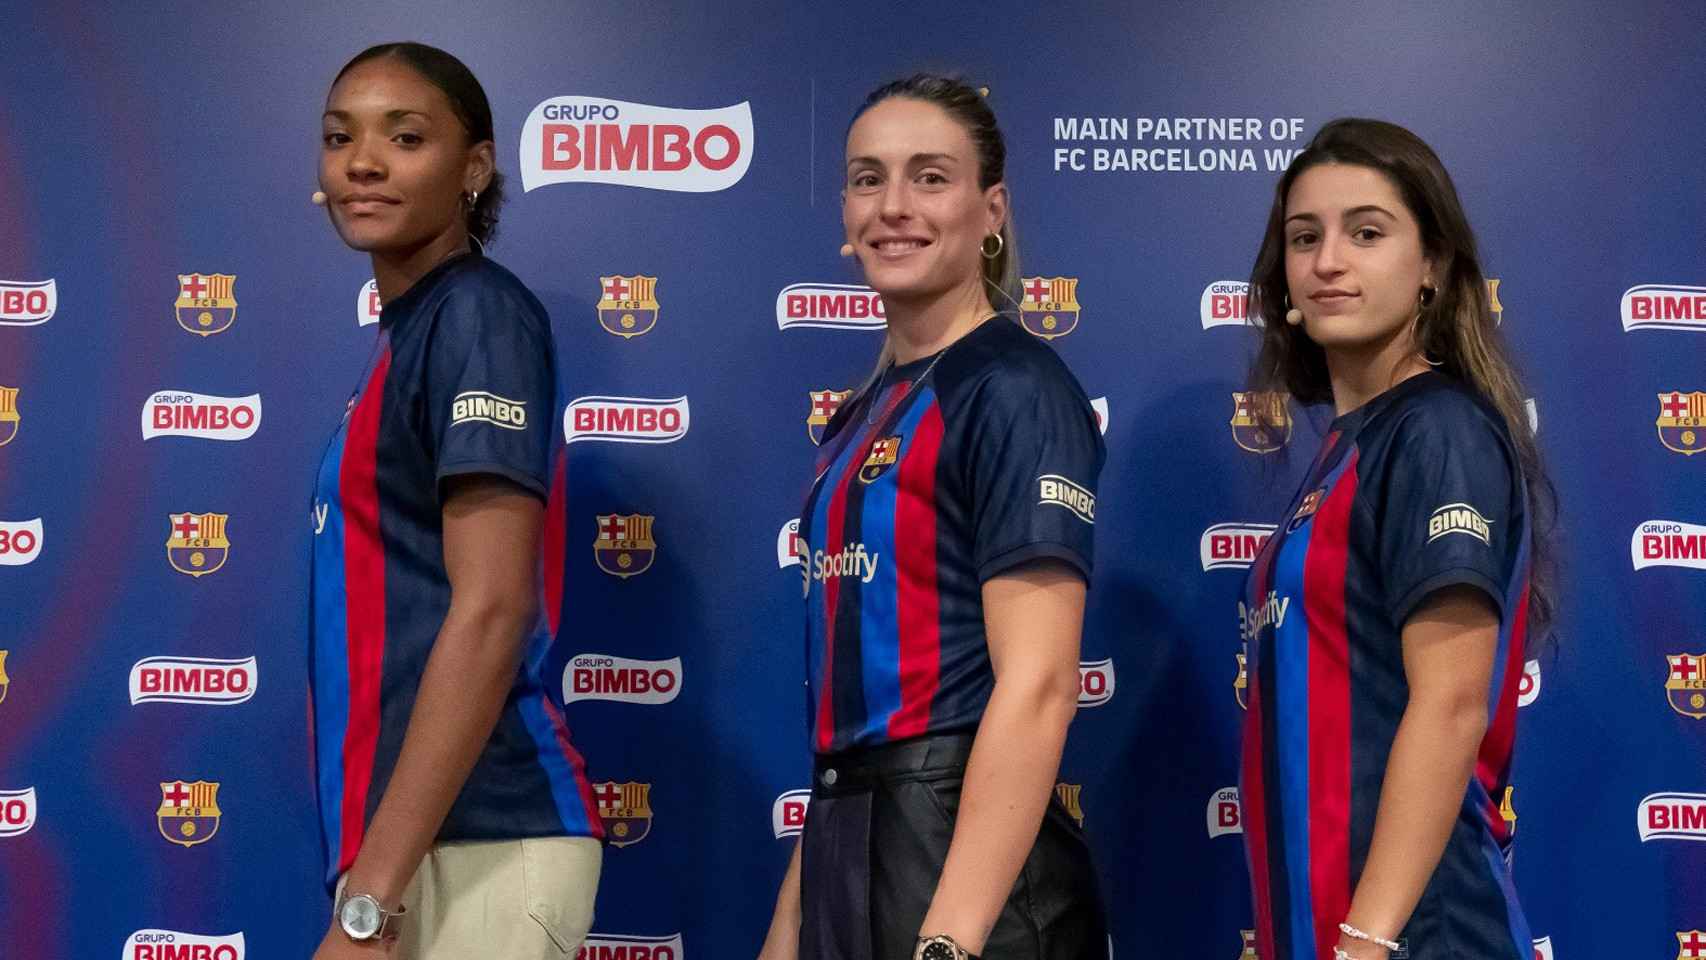 Las jugadoras del Barça Femenino lucen el logo de Bimbo, patrocinador de la manga de la camiseta